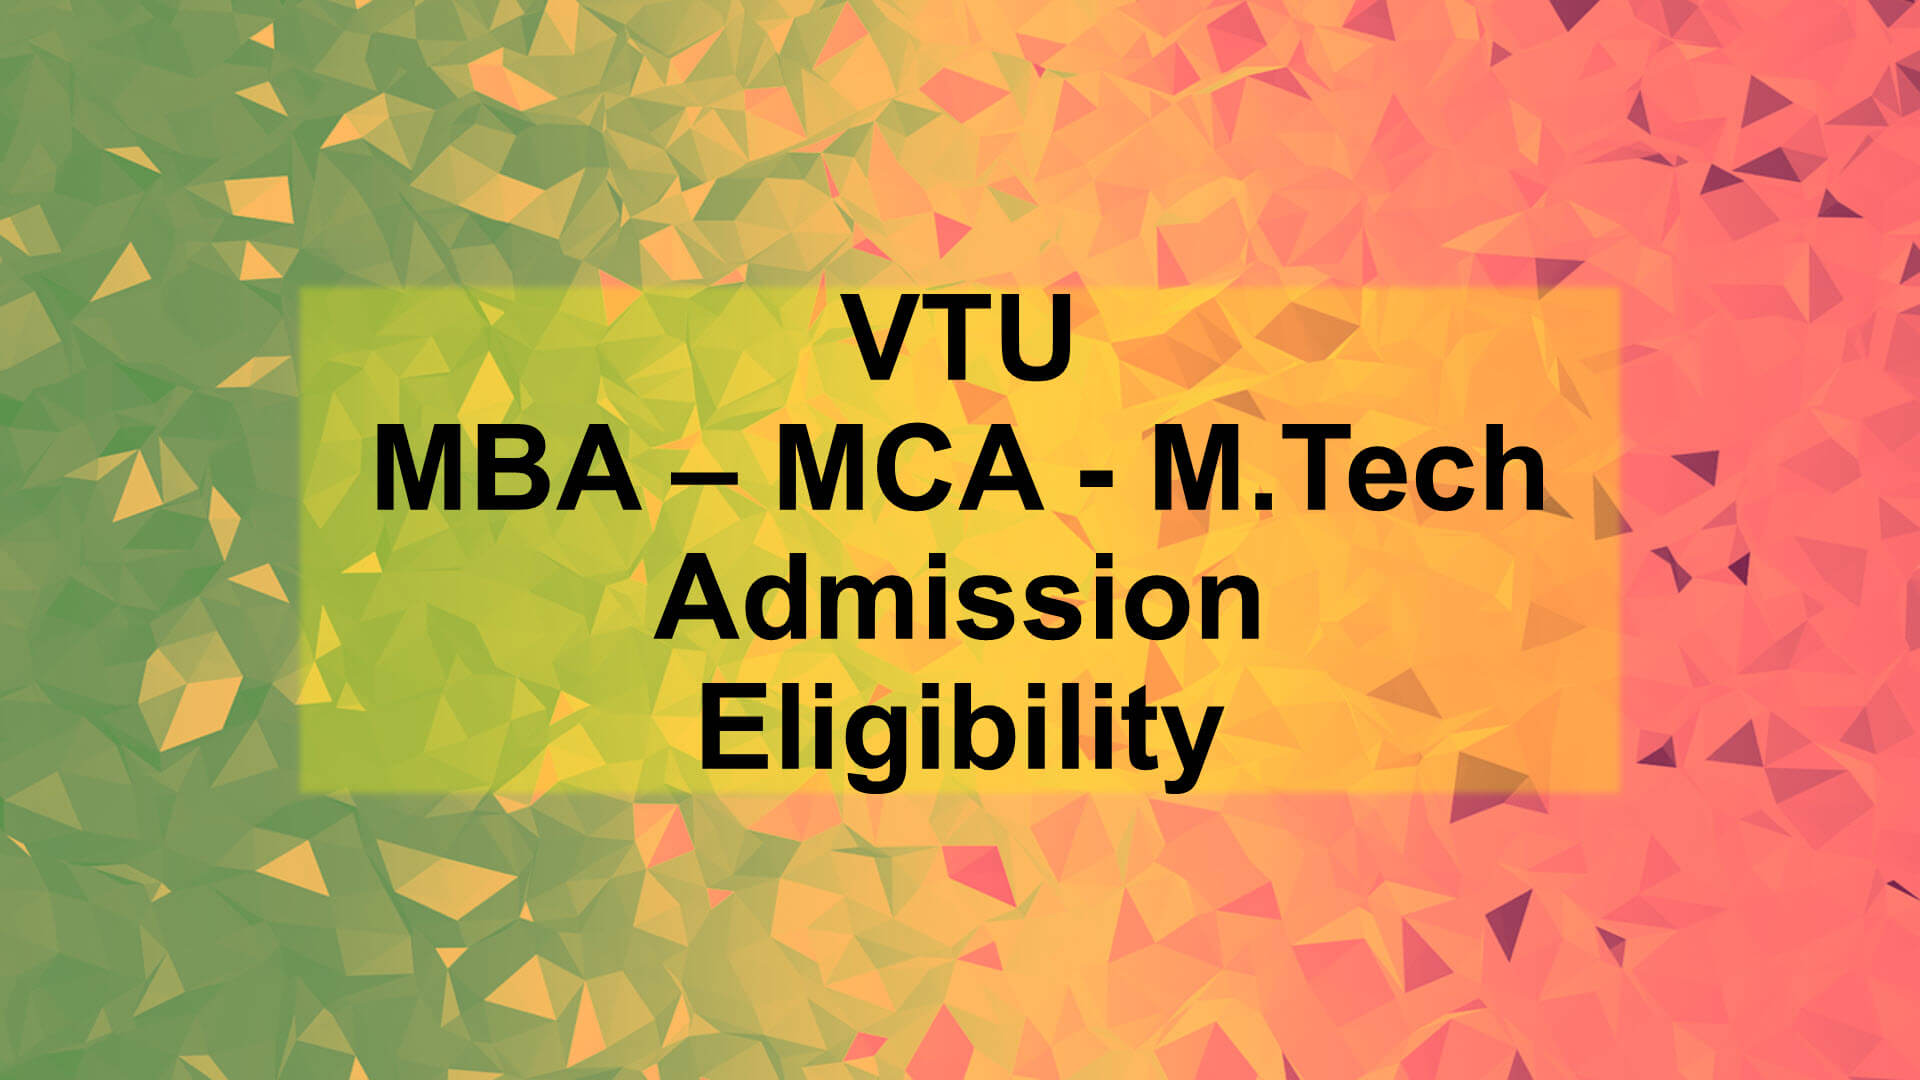 VTU MBA MCA Mtech admission eligibility